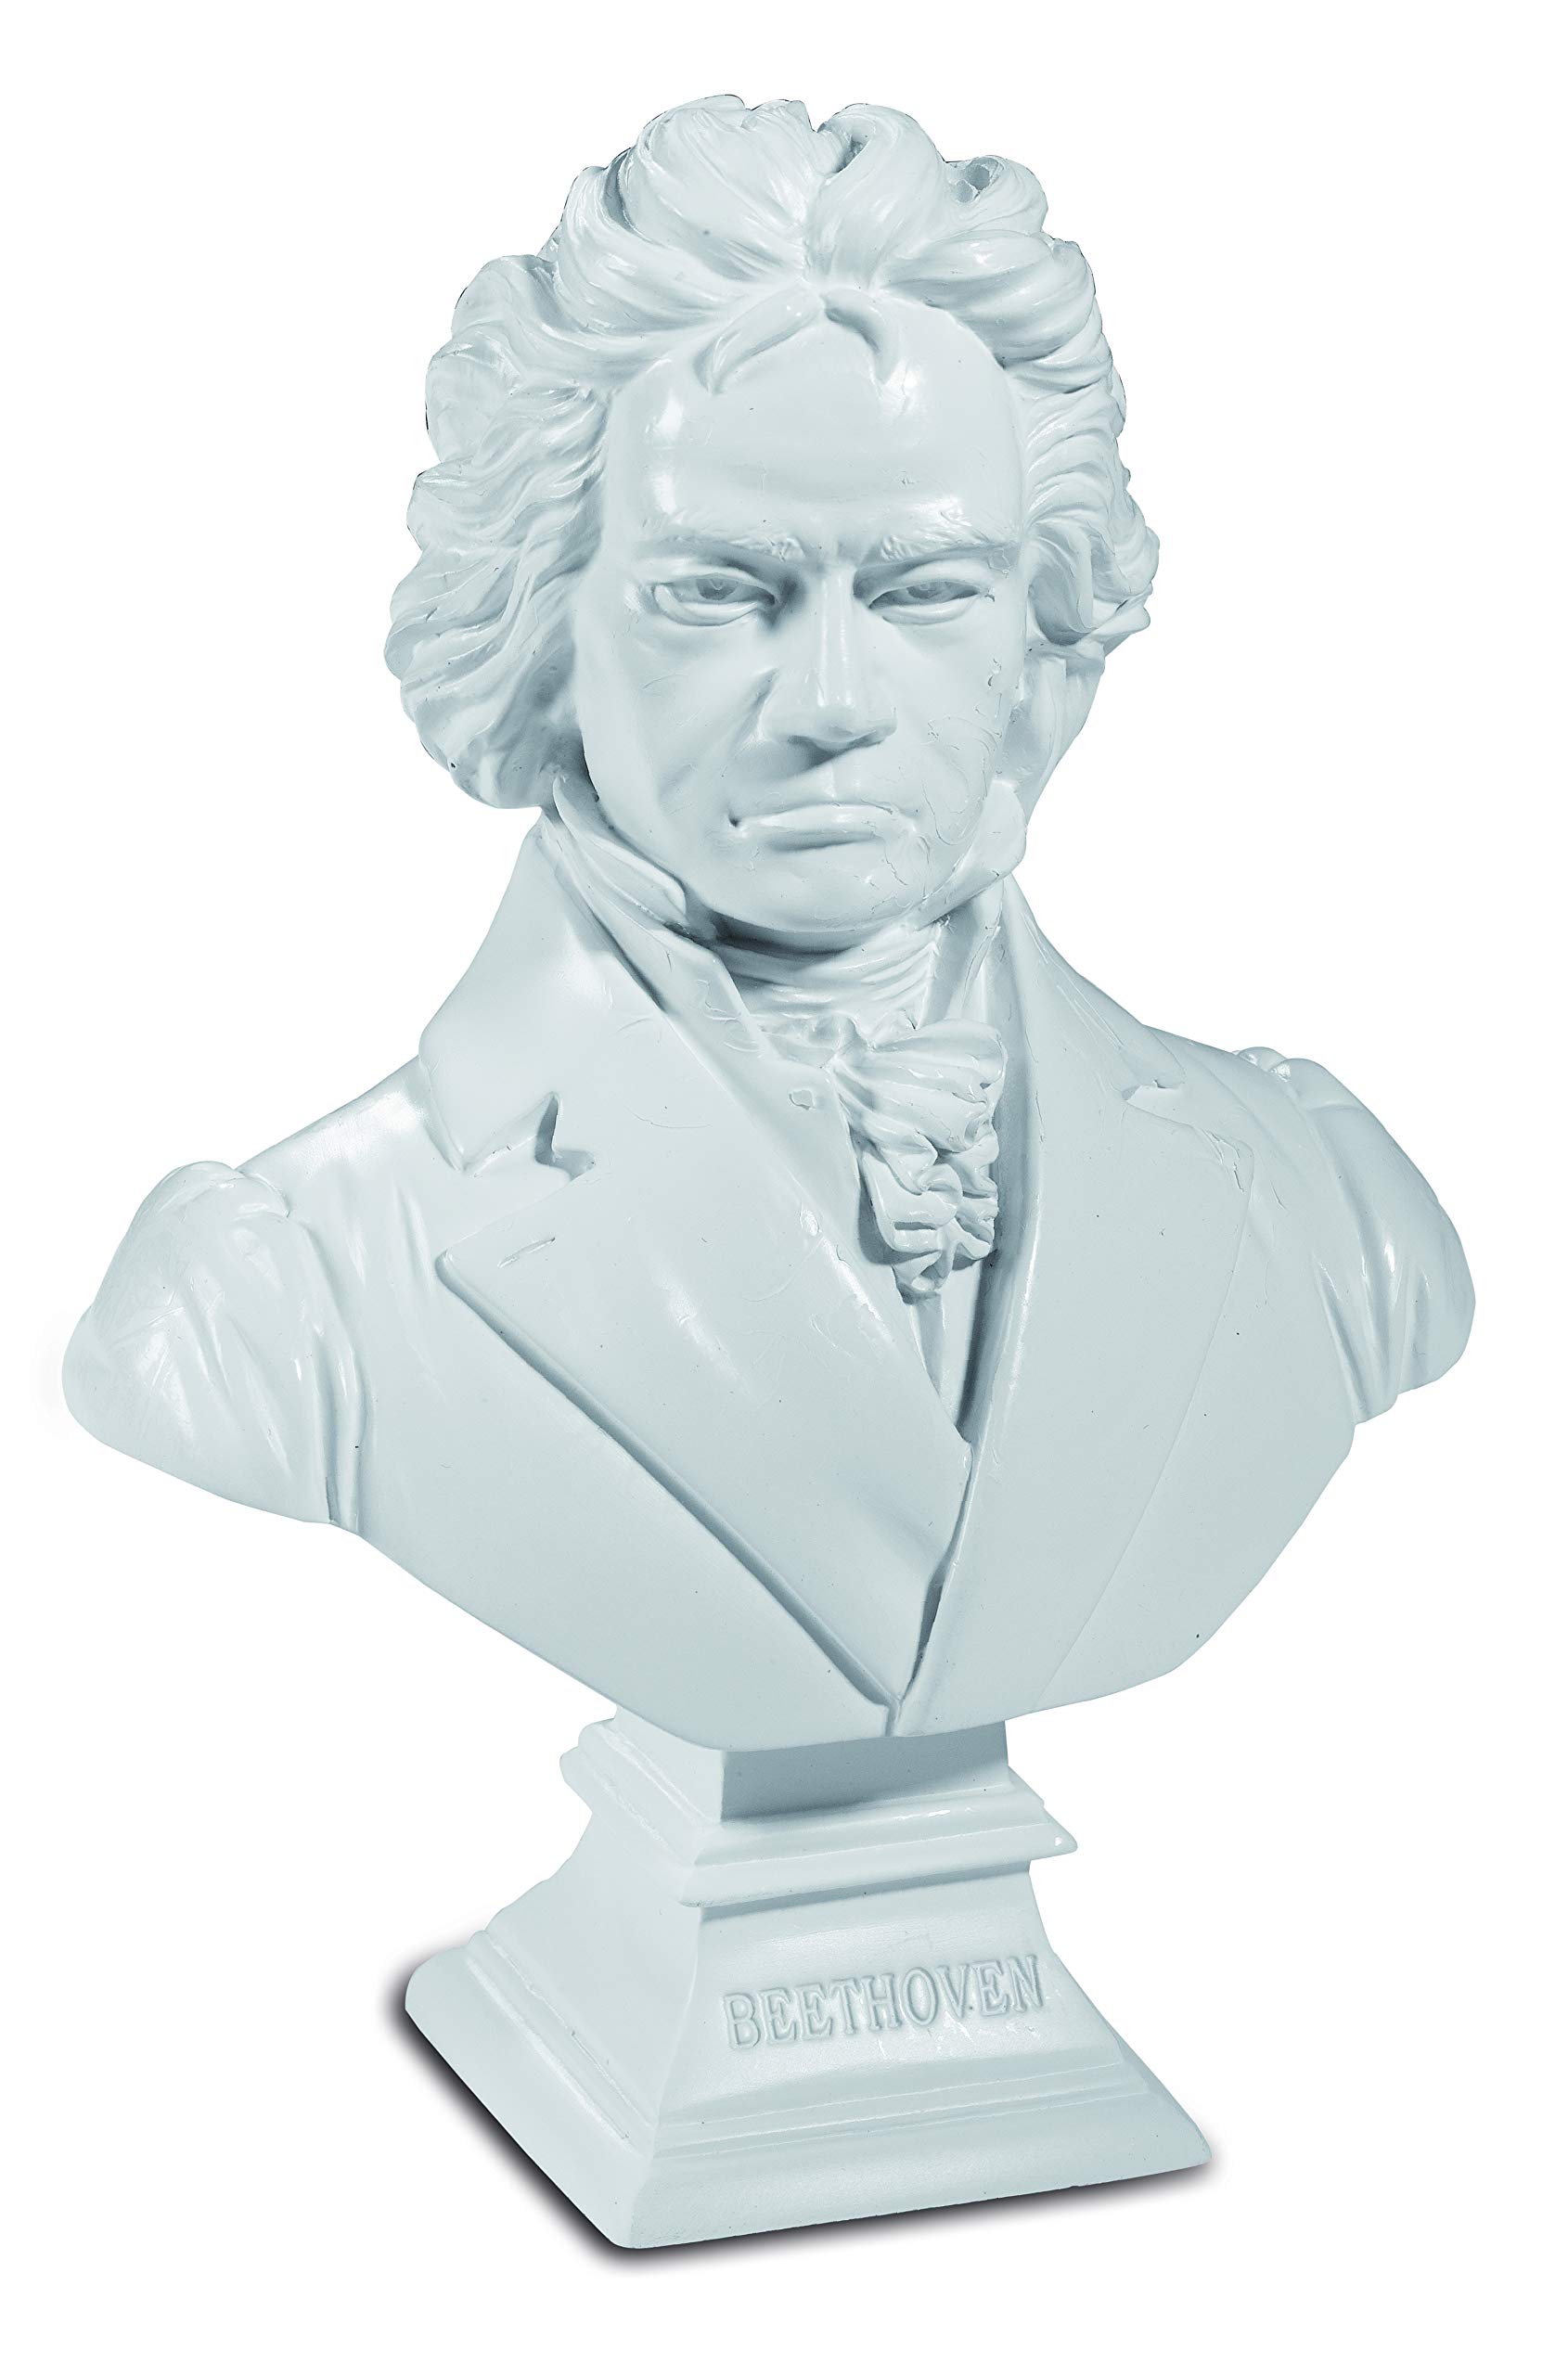 impexit Reproduktion Beethoven's Büste aus Kunstharz, 12,5 cm, Weiß